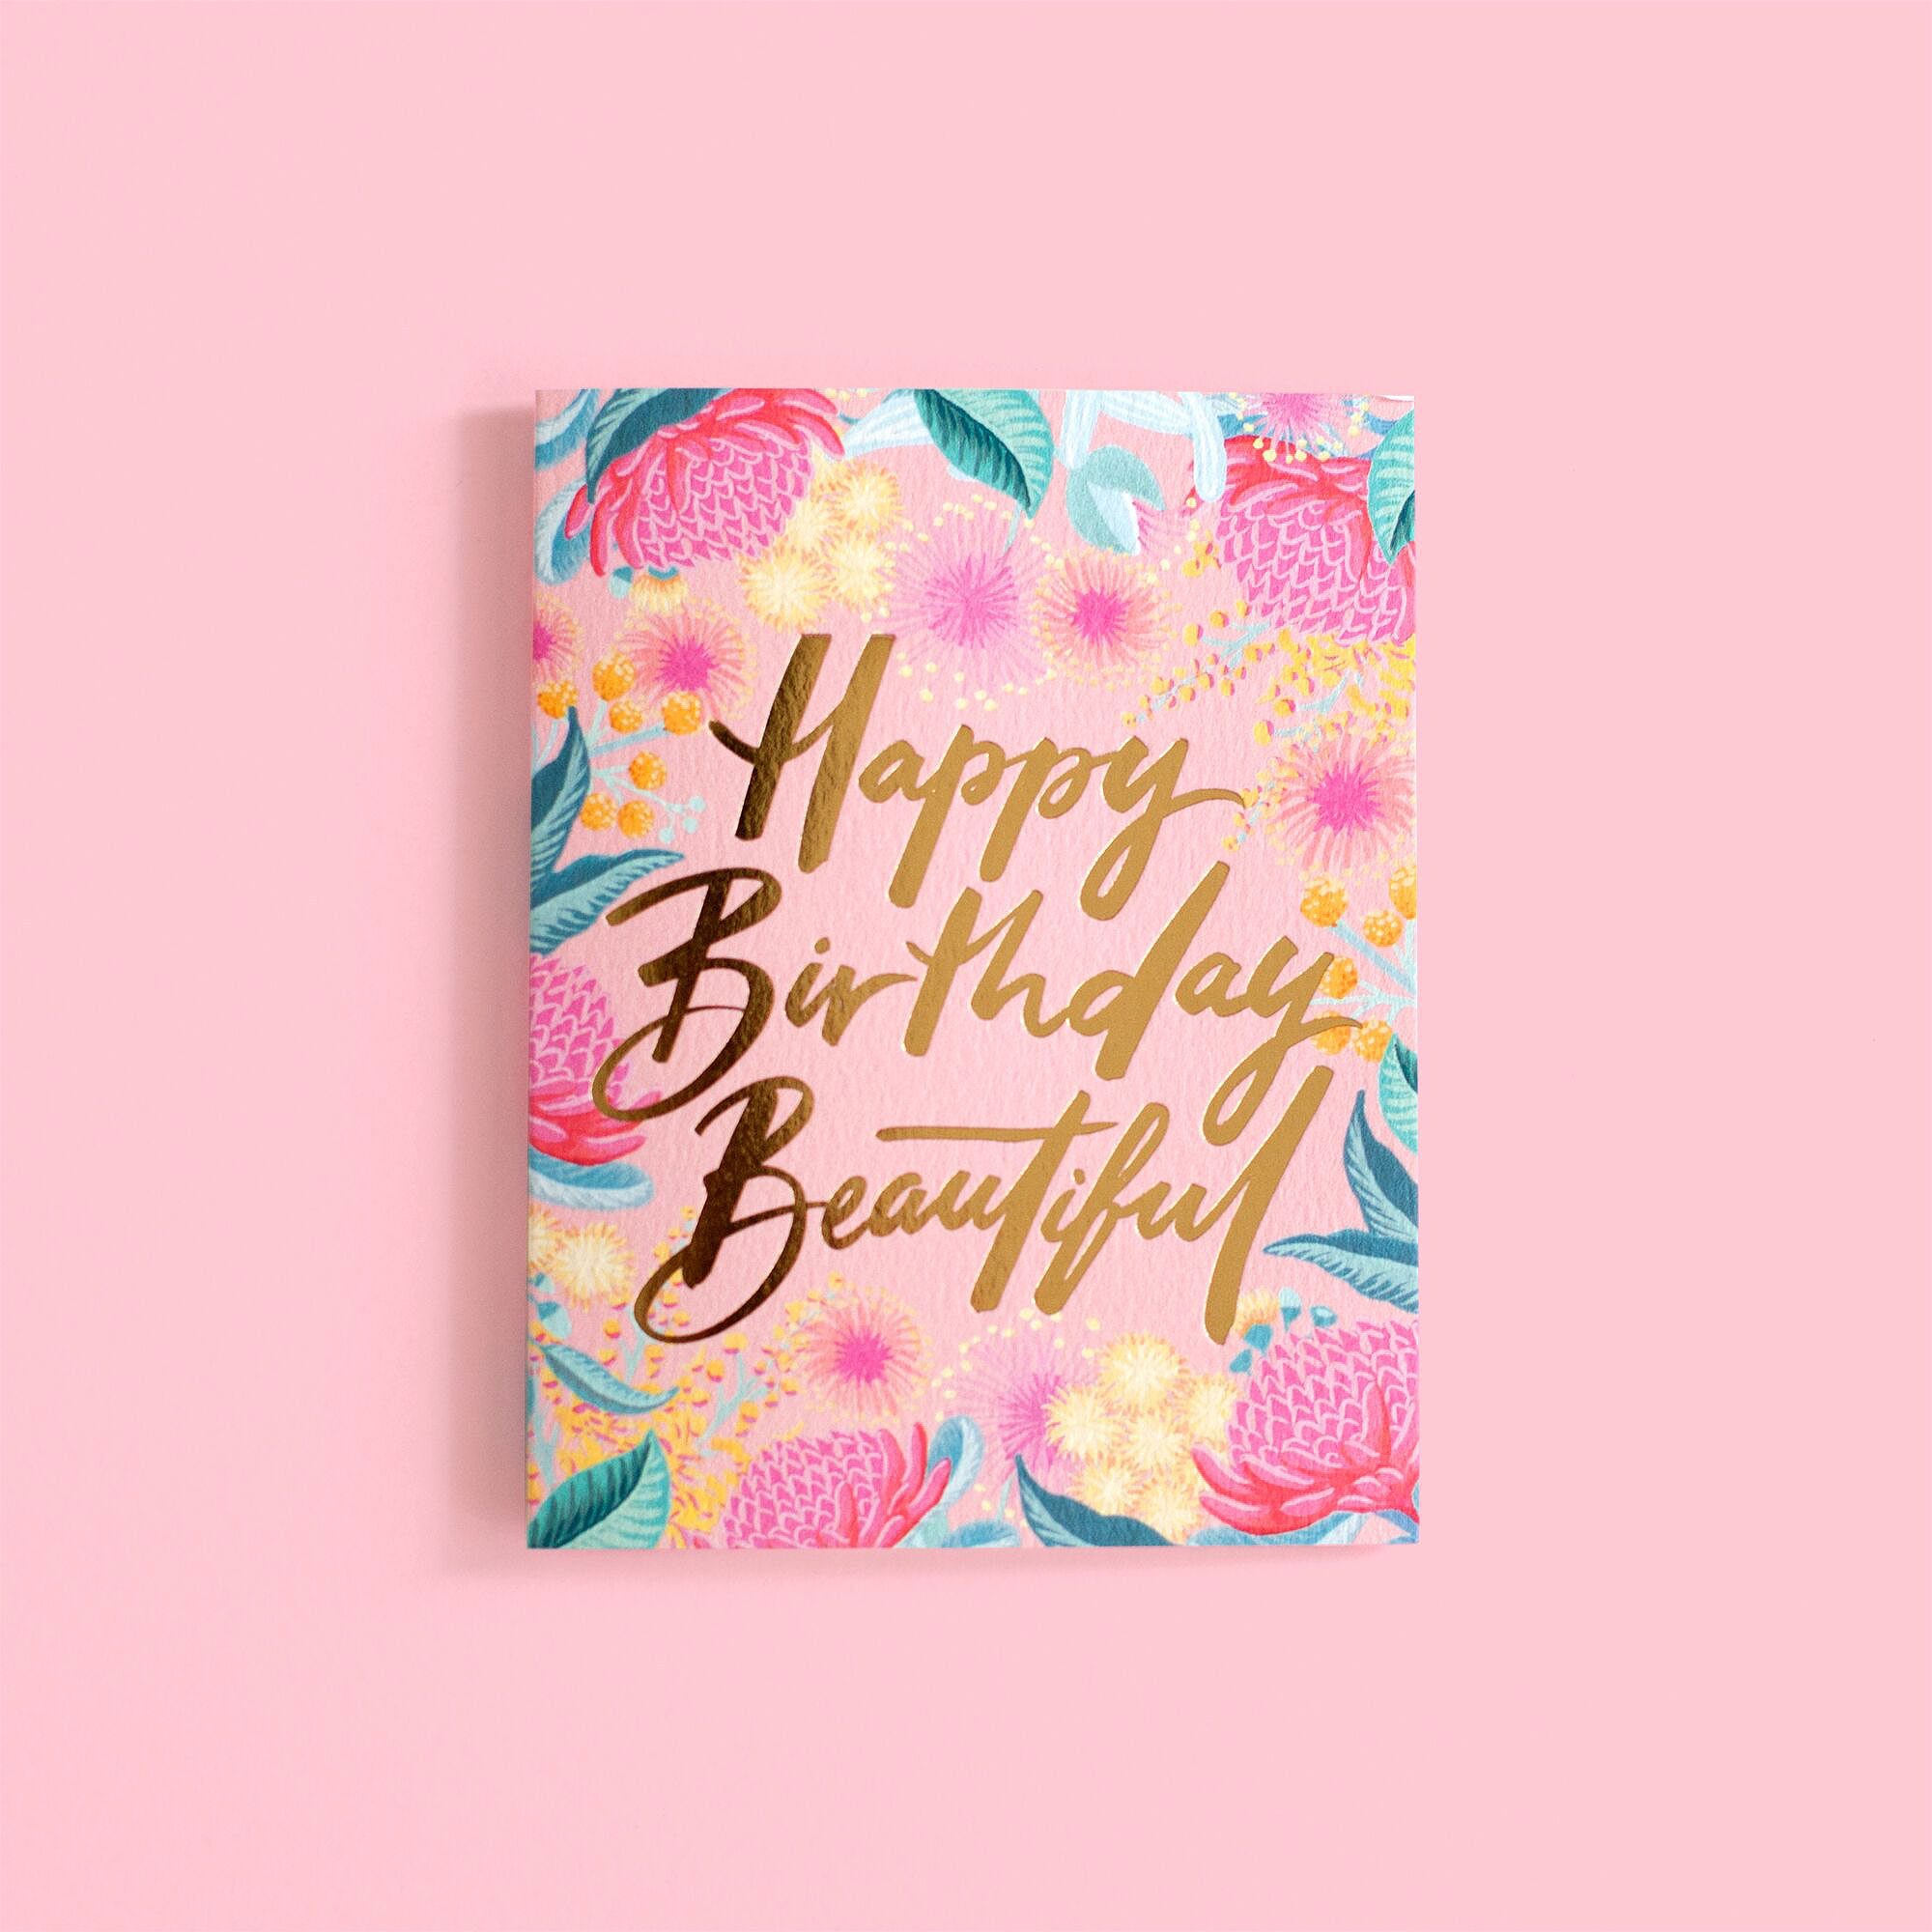 https://luxah.com.au/wp-content/uploads/2019/07/luxah-happy-birthday-beautiful.jpg